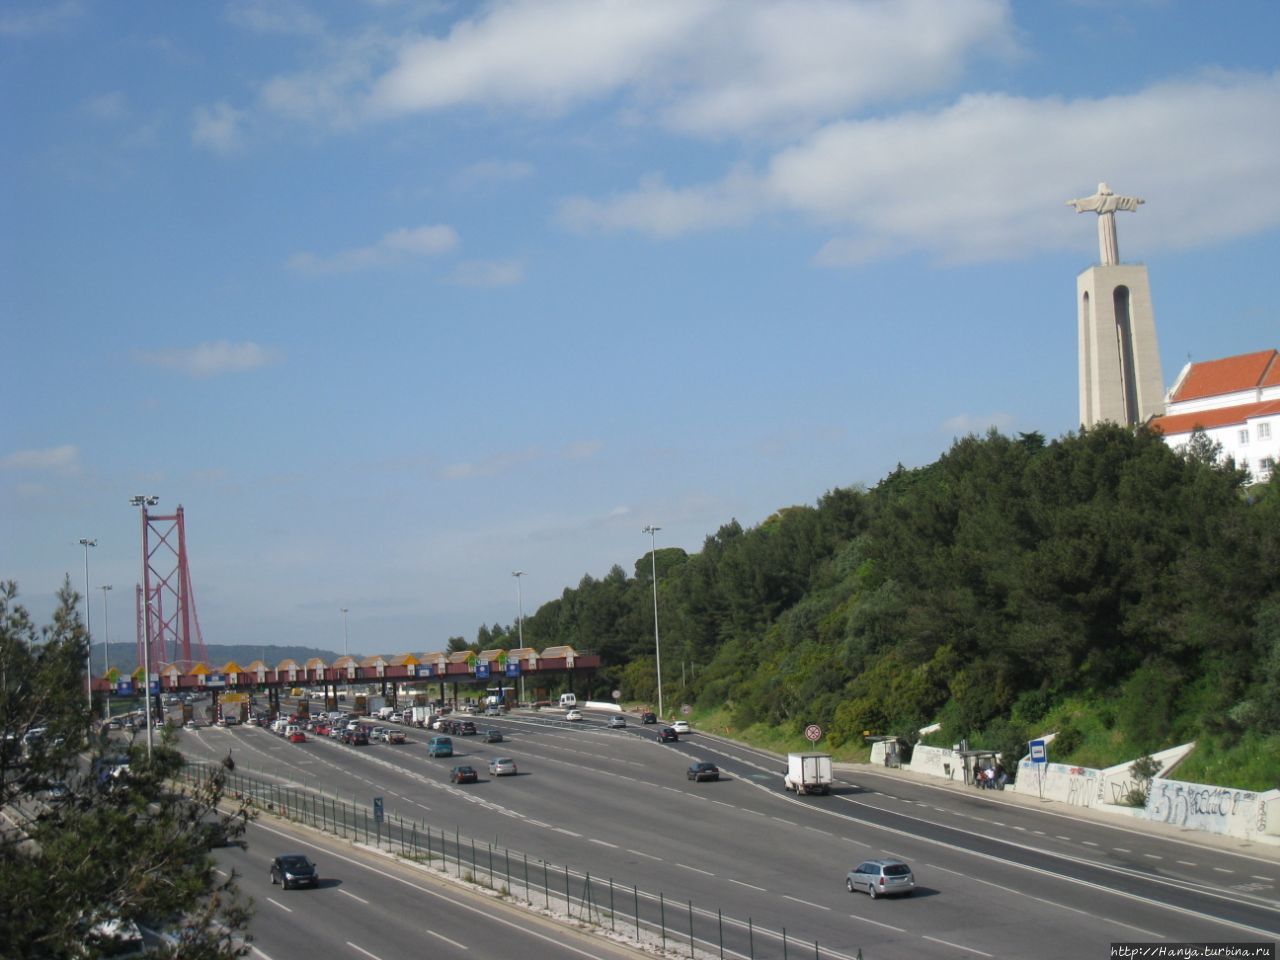 Монумент Царь Христос Лиссабон, Португалия